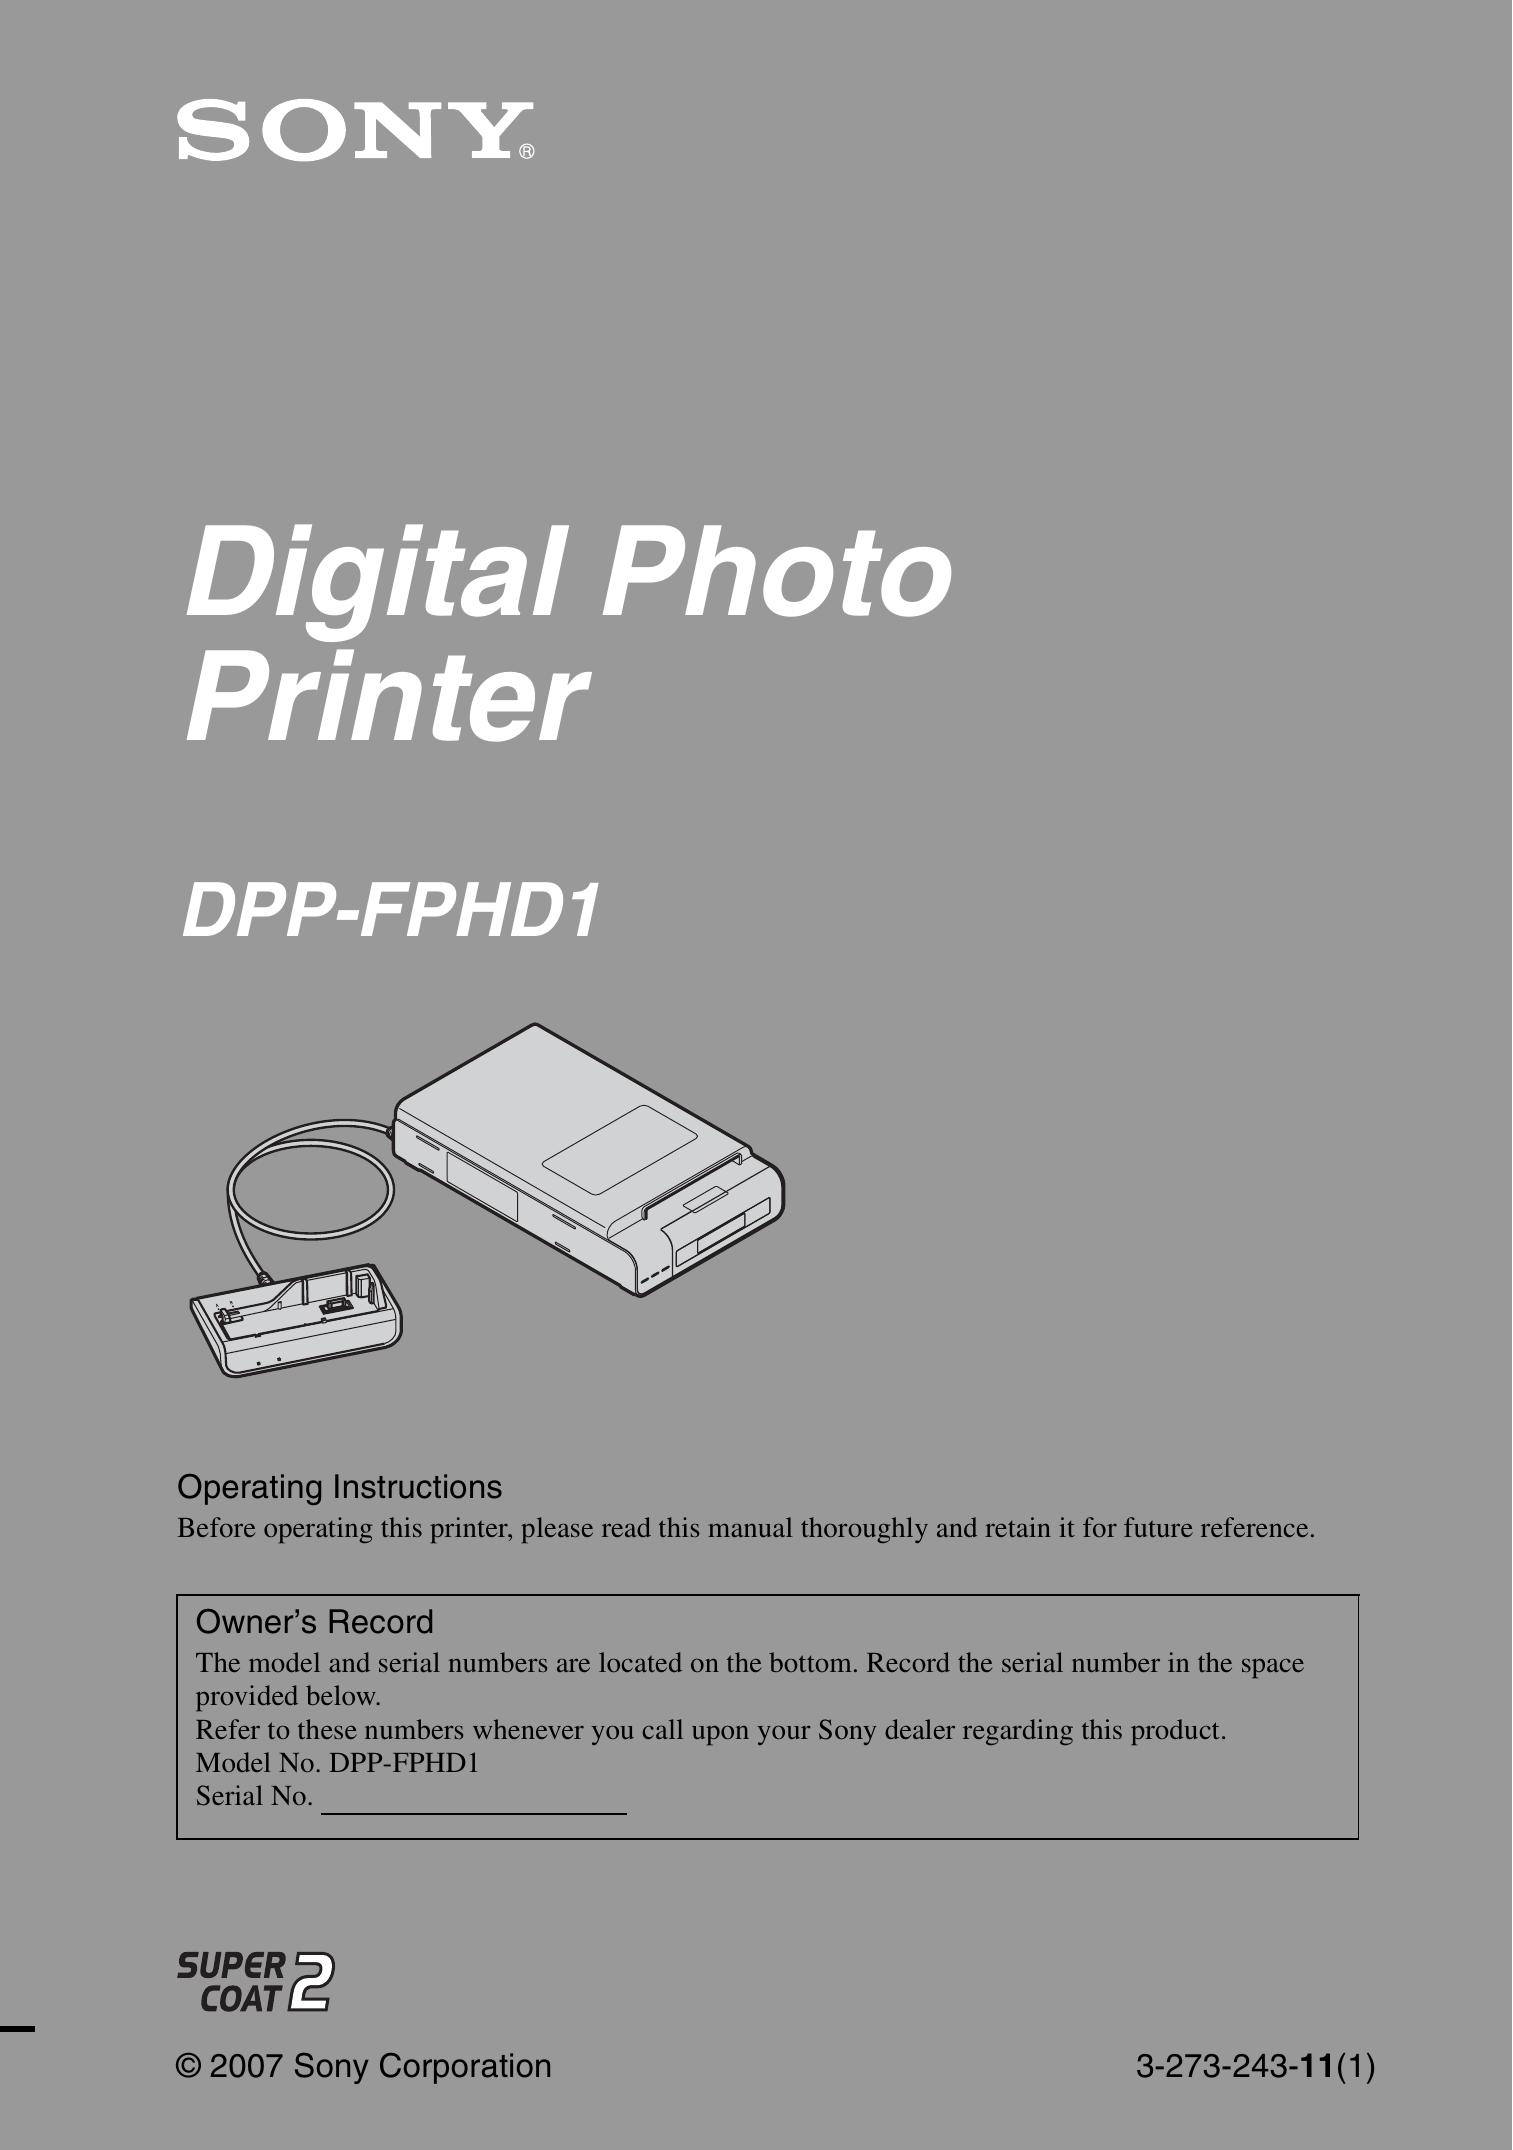 Sony DPP-FPHD1 Photo Printer User Manual